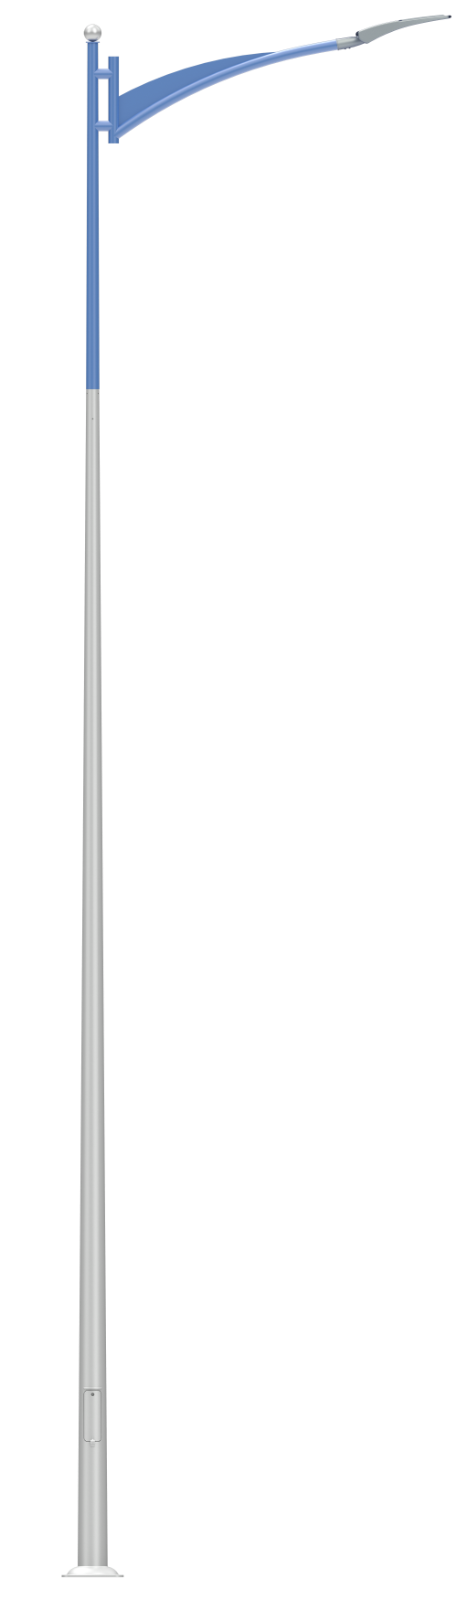 Lighting Pole LG02